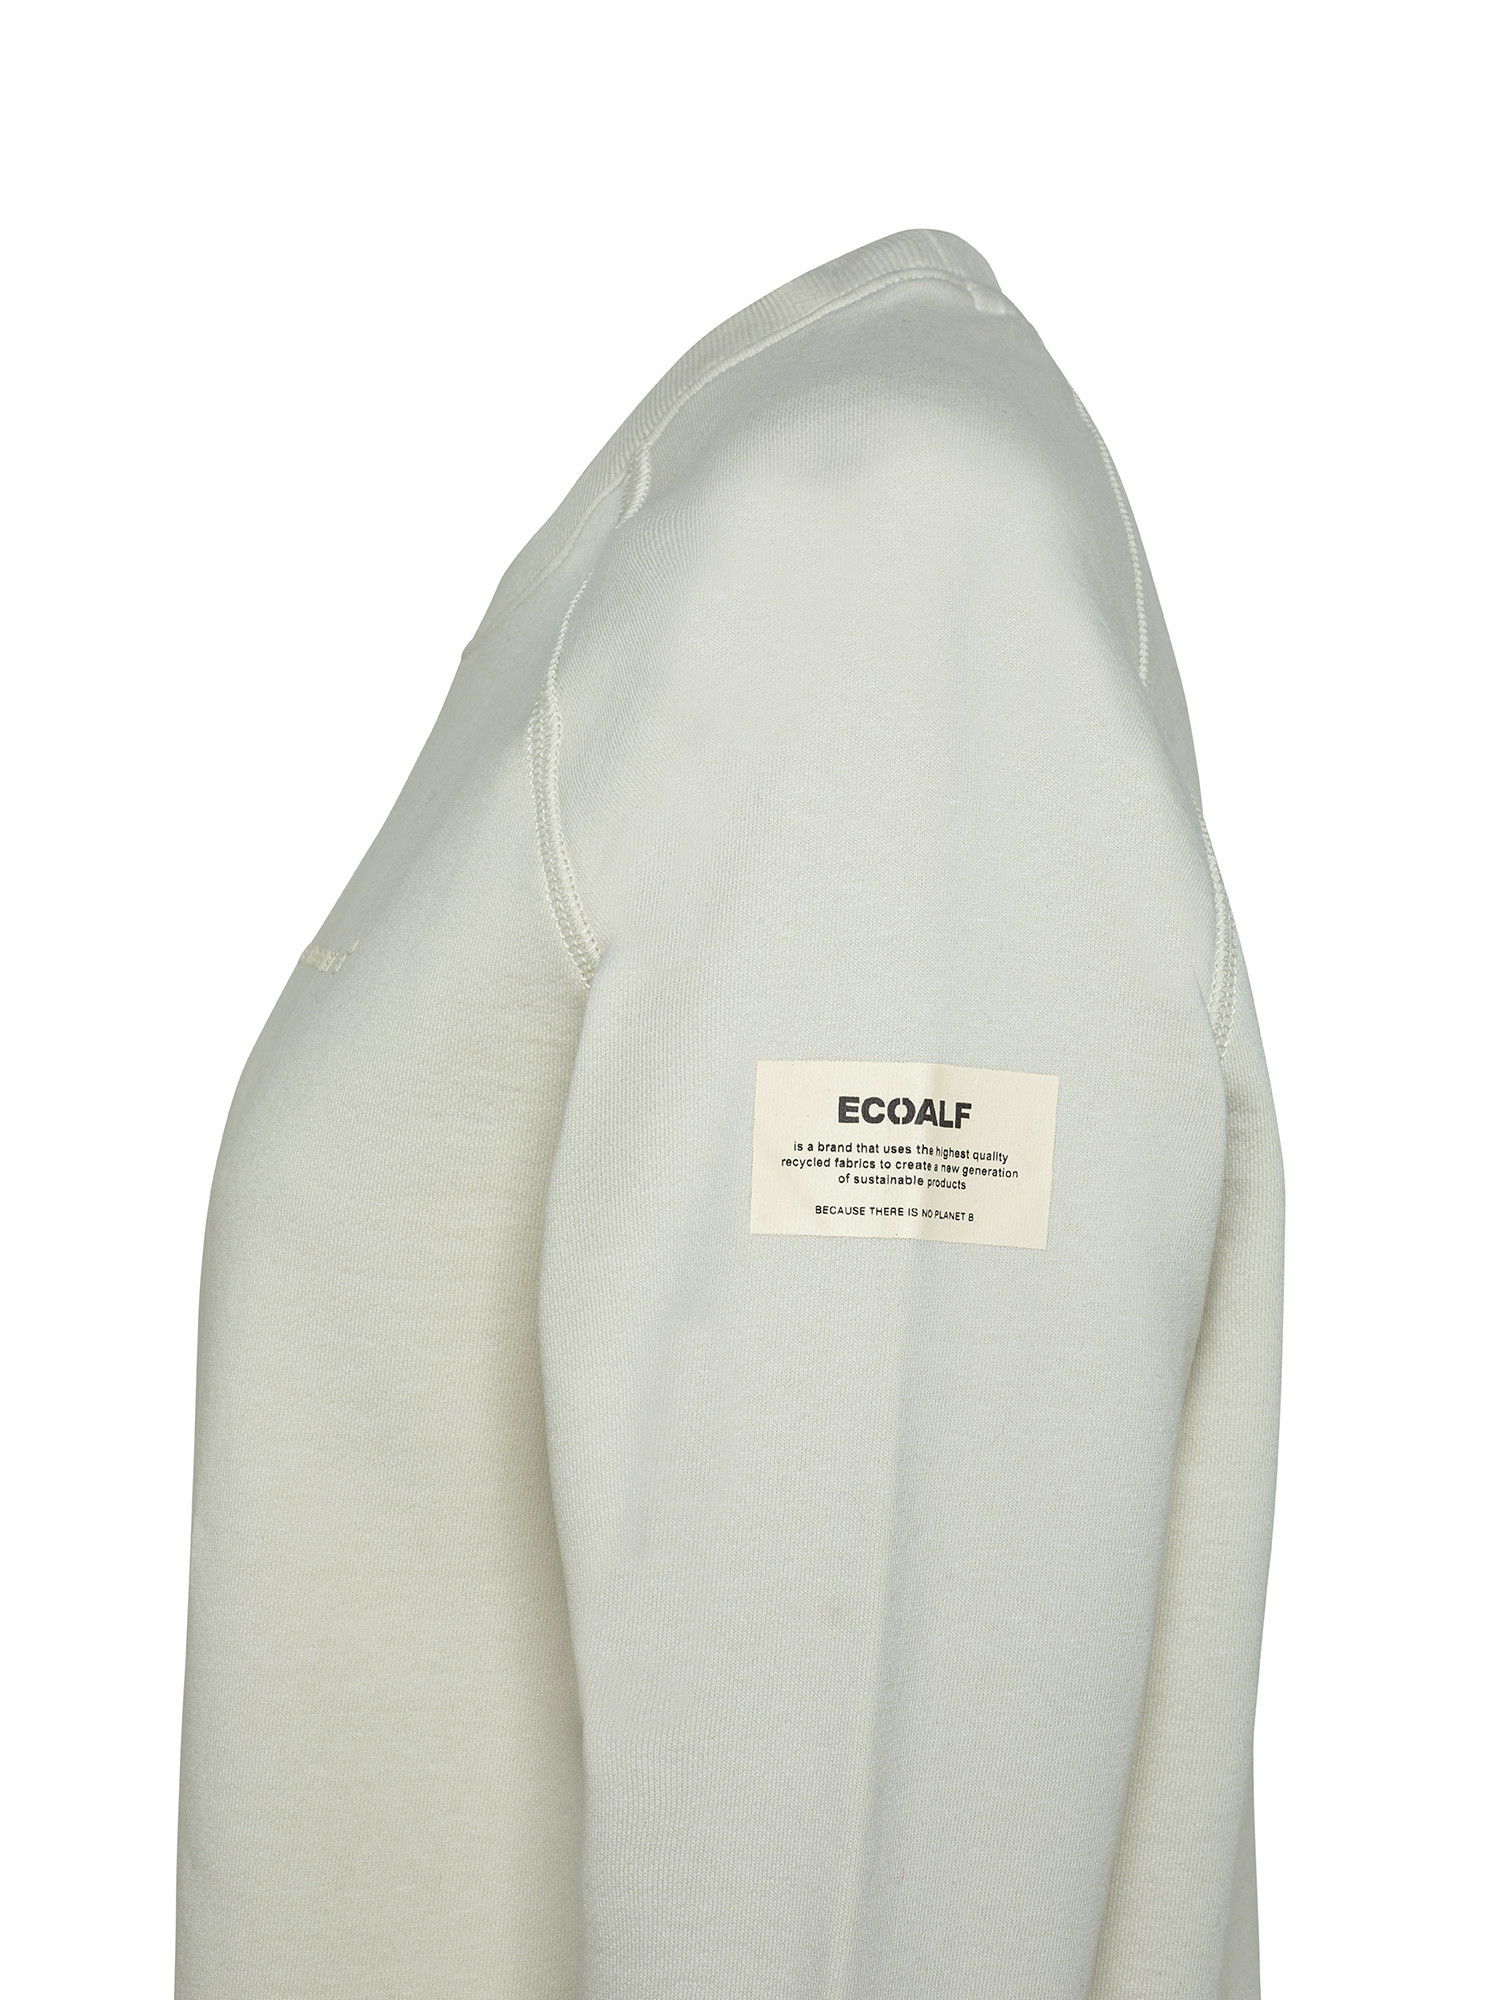 Ecoalf - Sirah sweatshirt with print, White, large image number 2